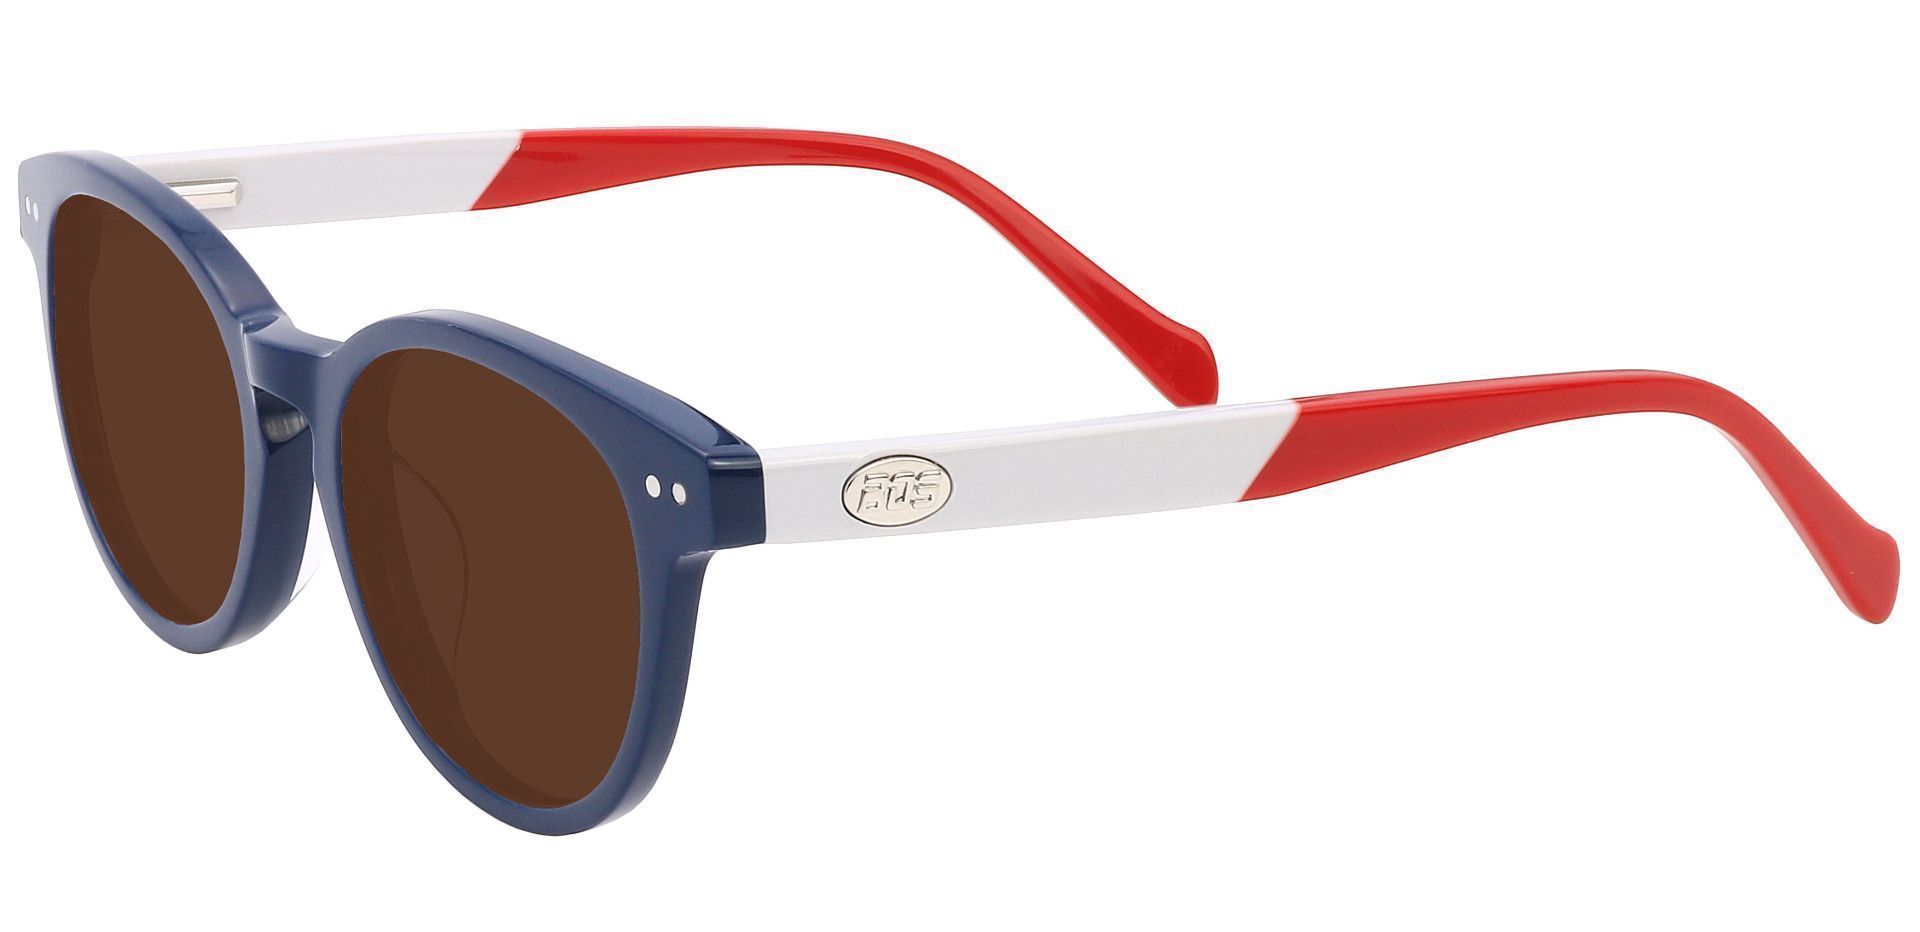 Revere Oval Prescription Sunglasses - Blue Frame With Brown Lenses